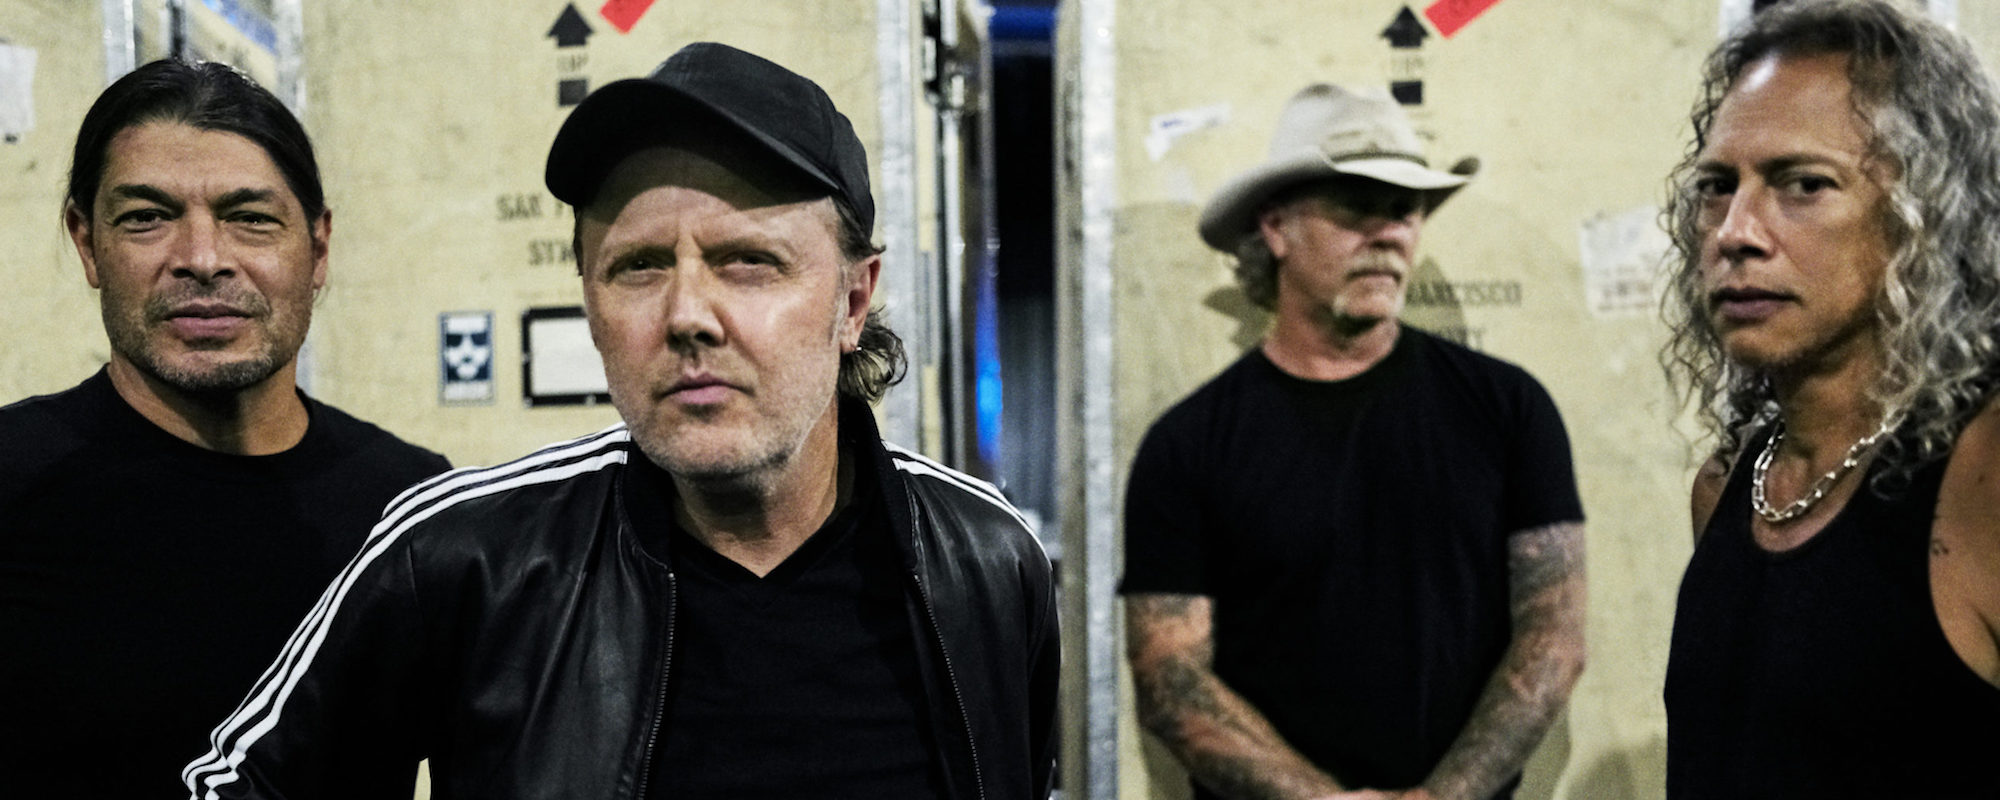 Metallica Play Special Concert Honoring Original Megaforce Label Founders Jonny and Marsha Zazula